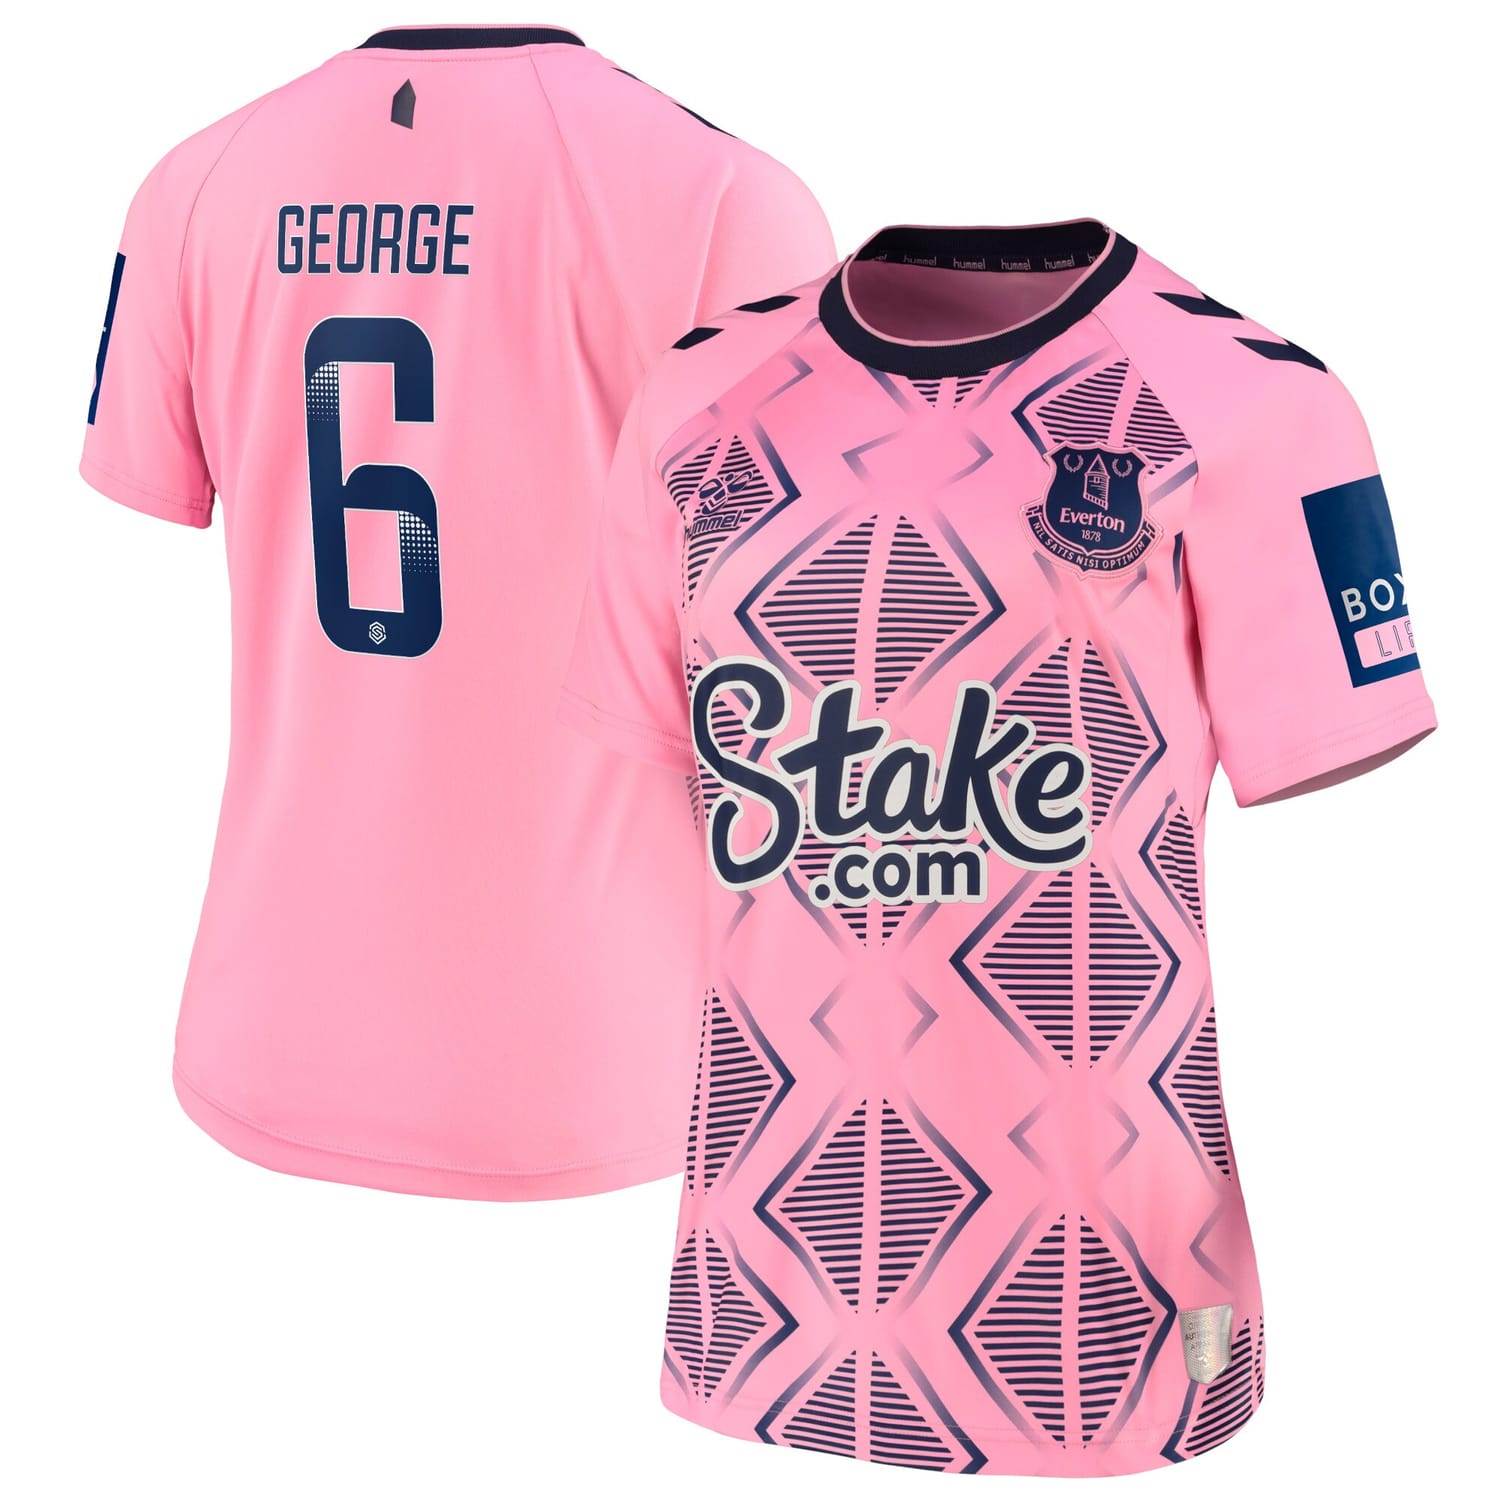 Premier League Everton Away Jersey Shirt 2022-23 player Gabrielle George 6 printing for Women